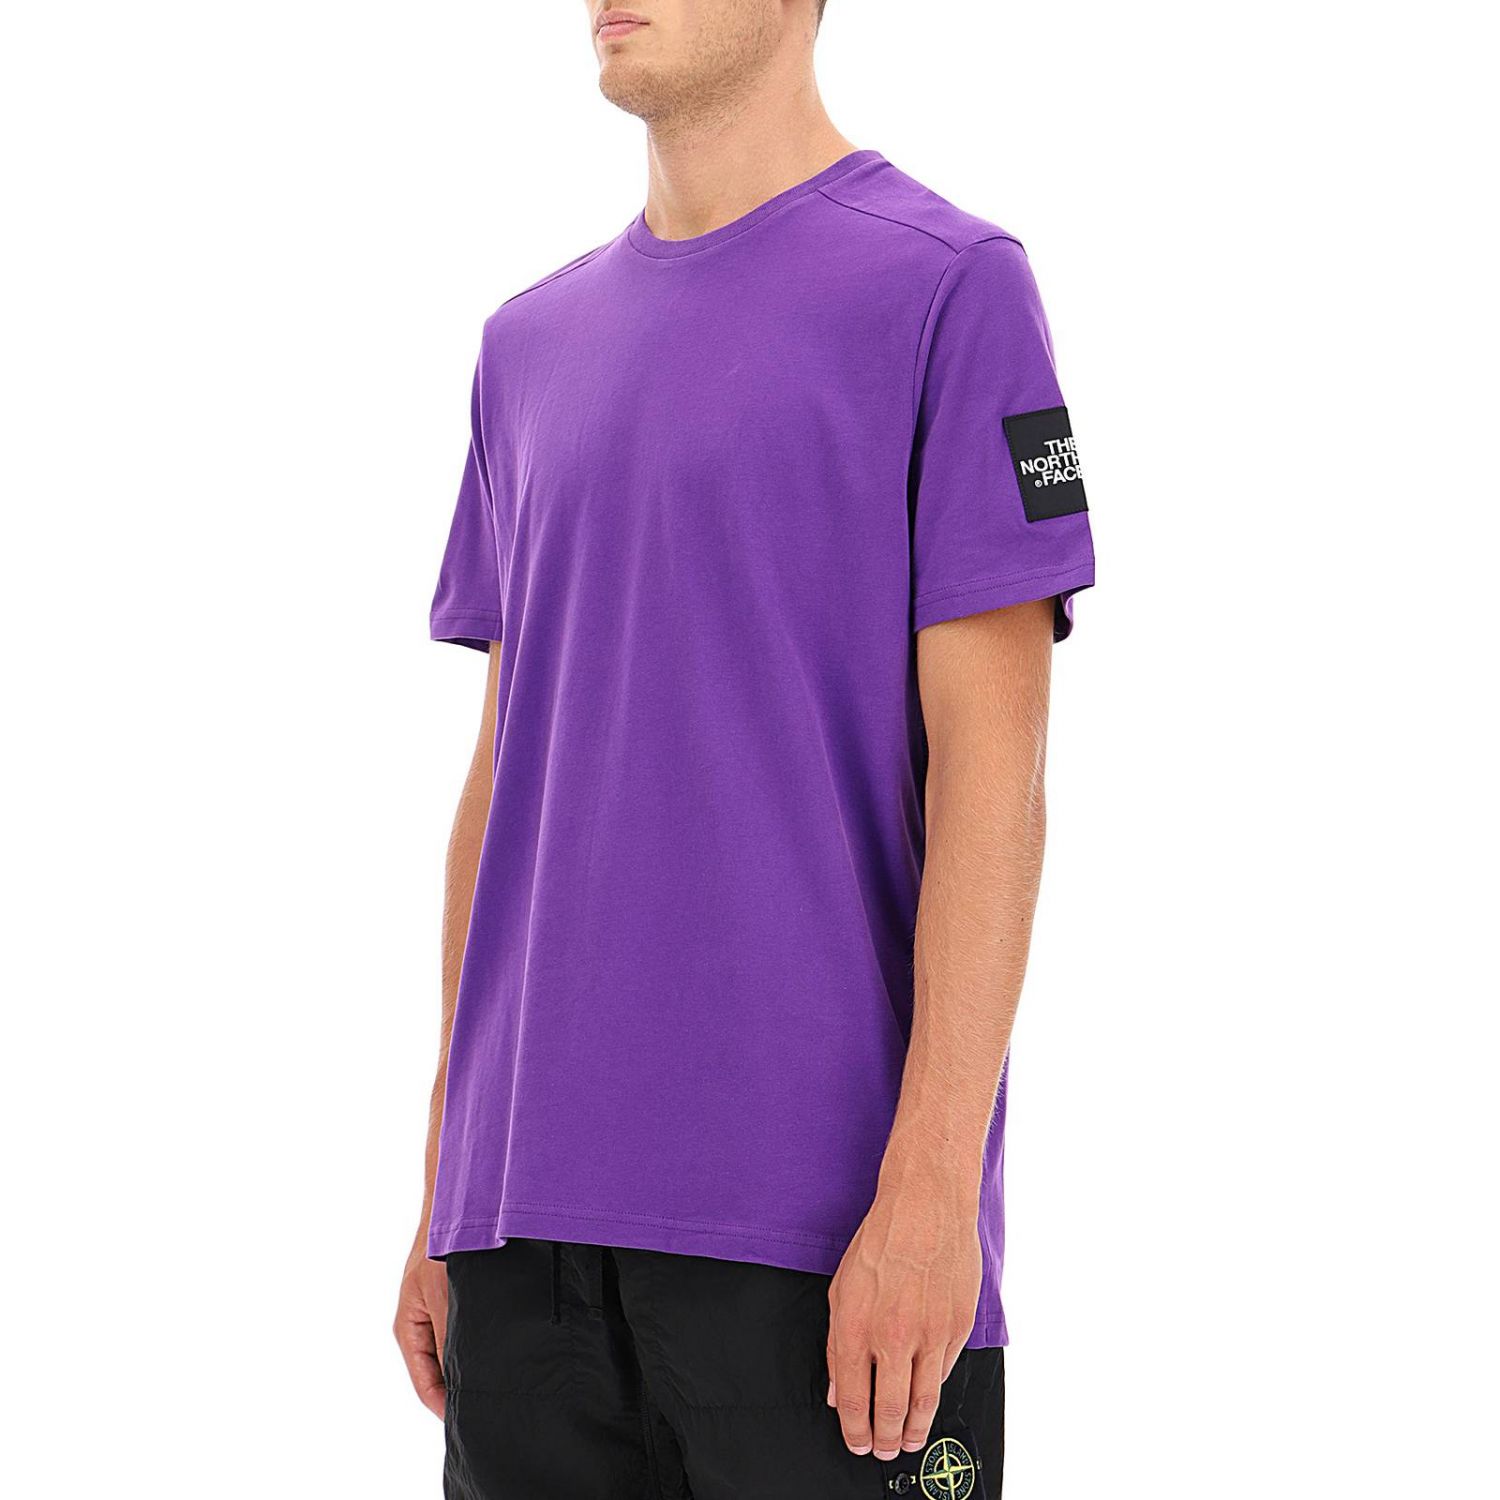 purple north face t shirt